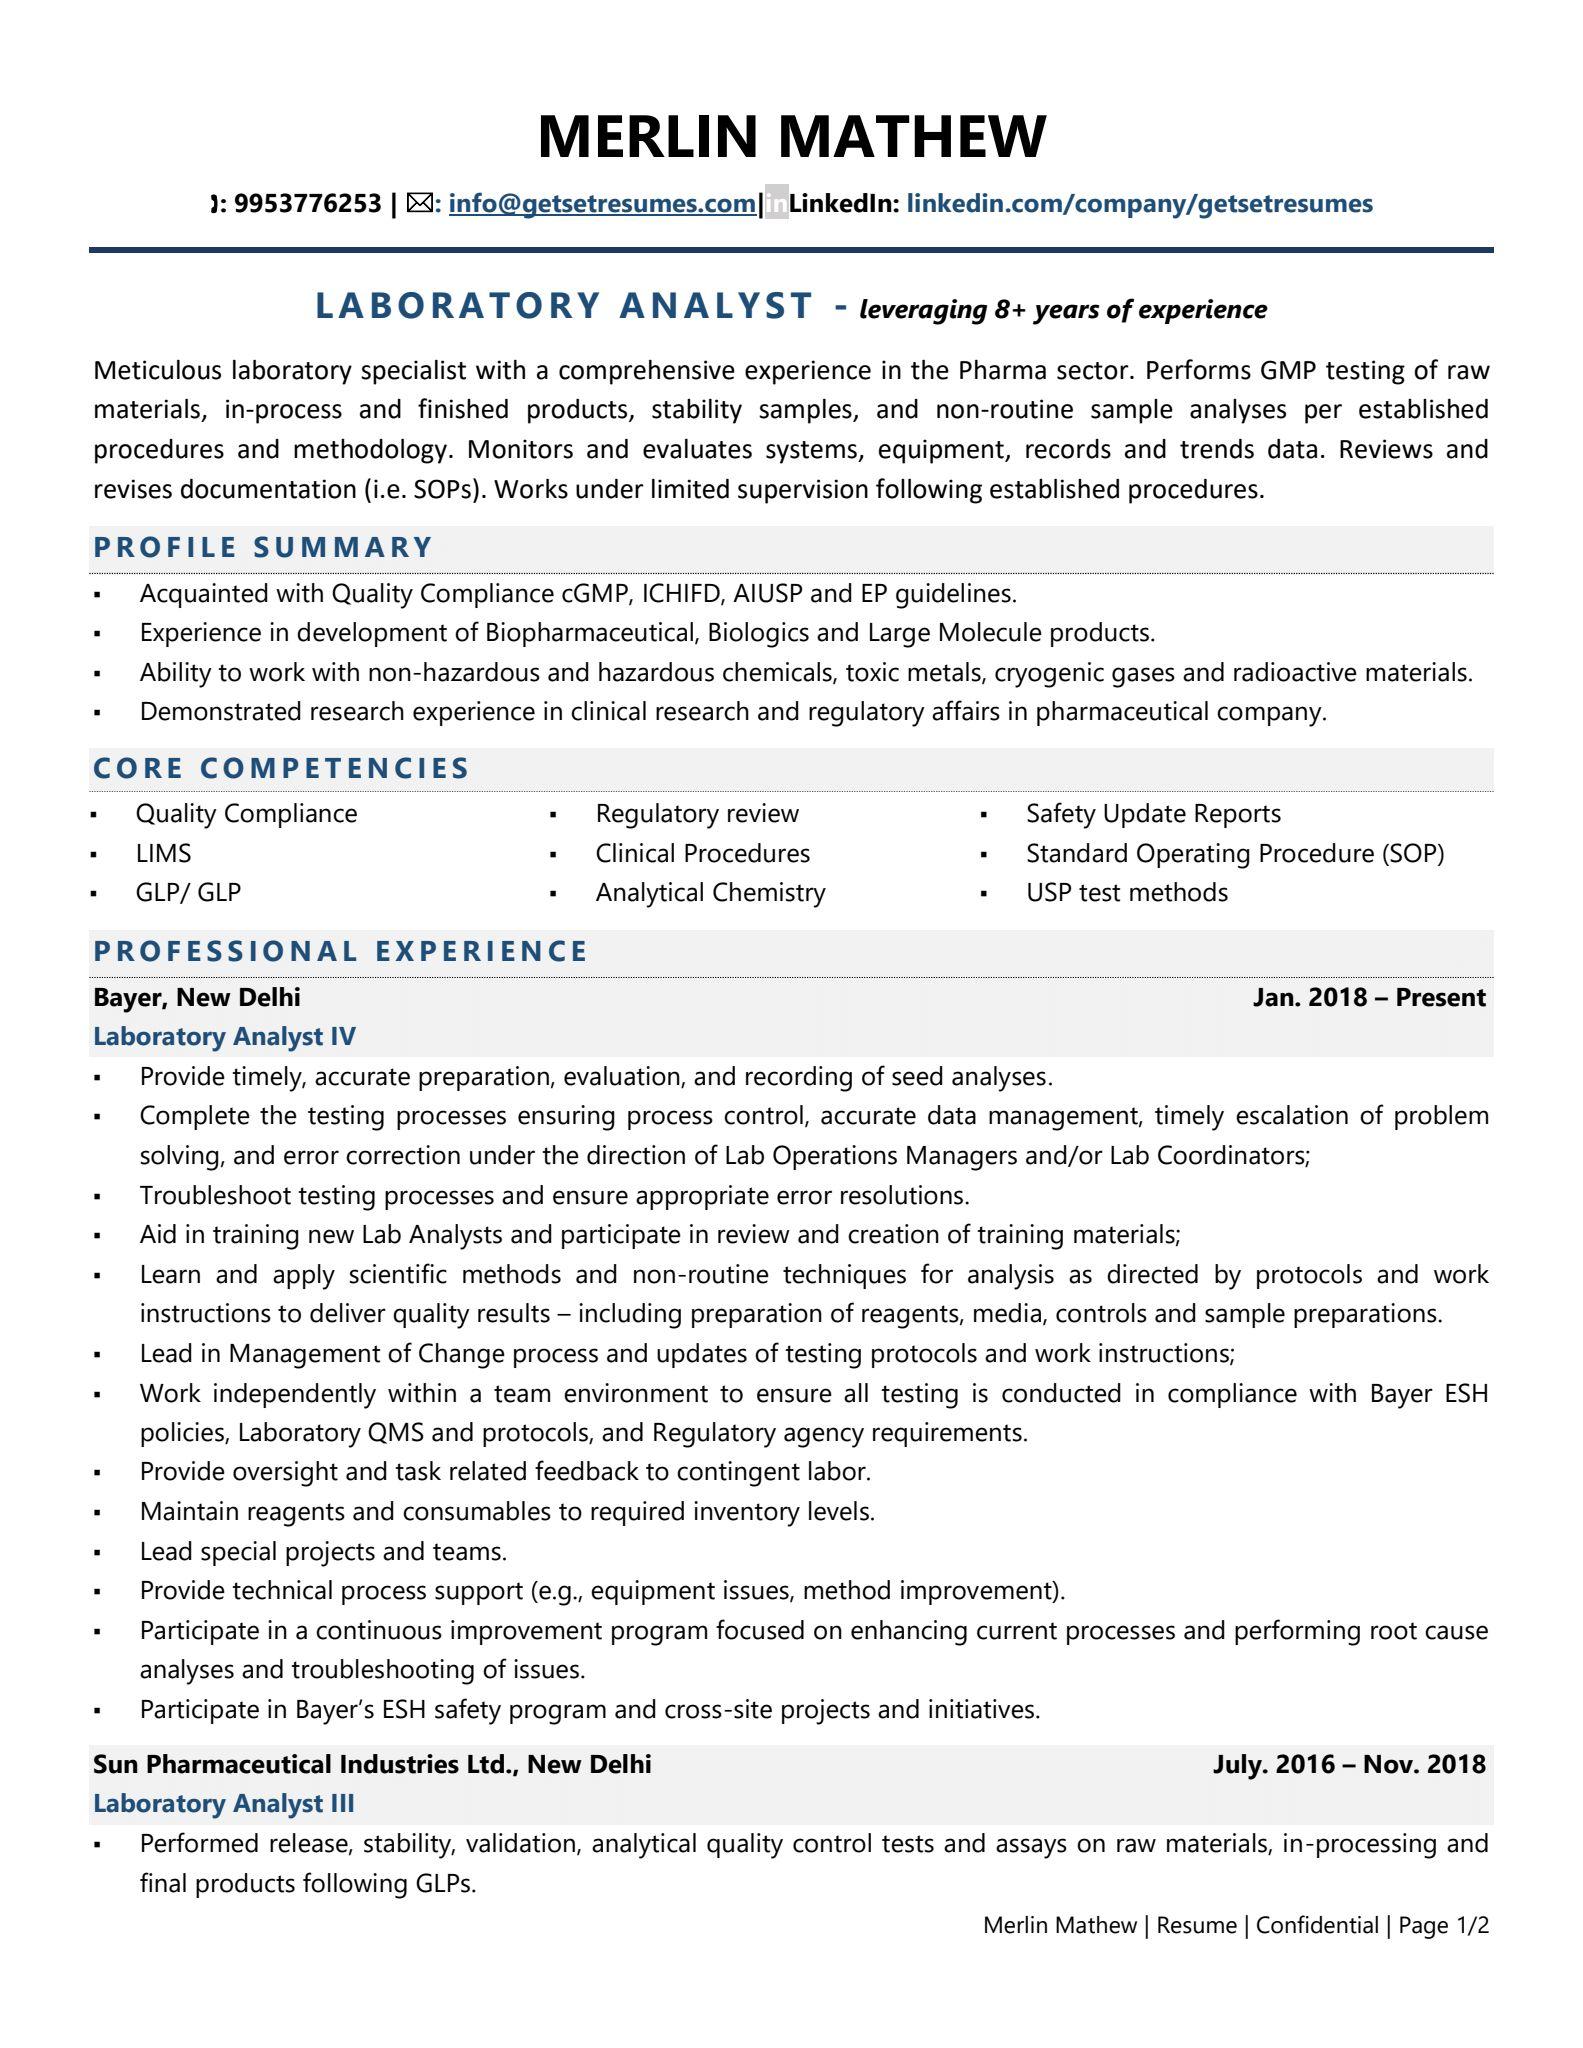 Laboratory Analyst - Resume Example & Template